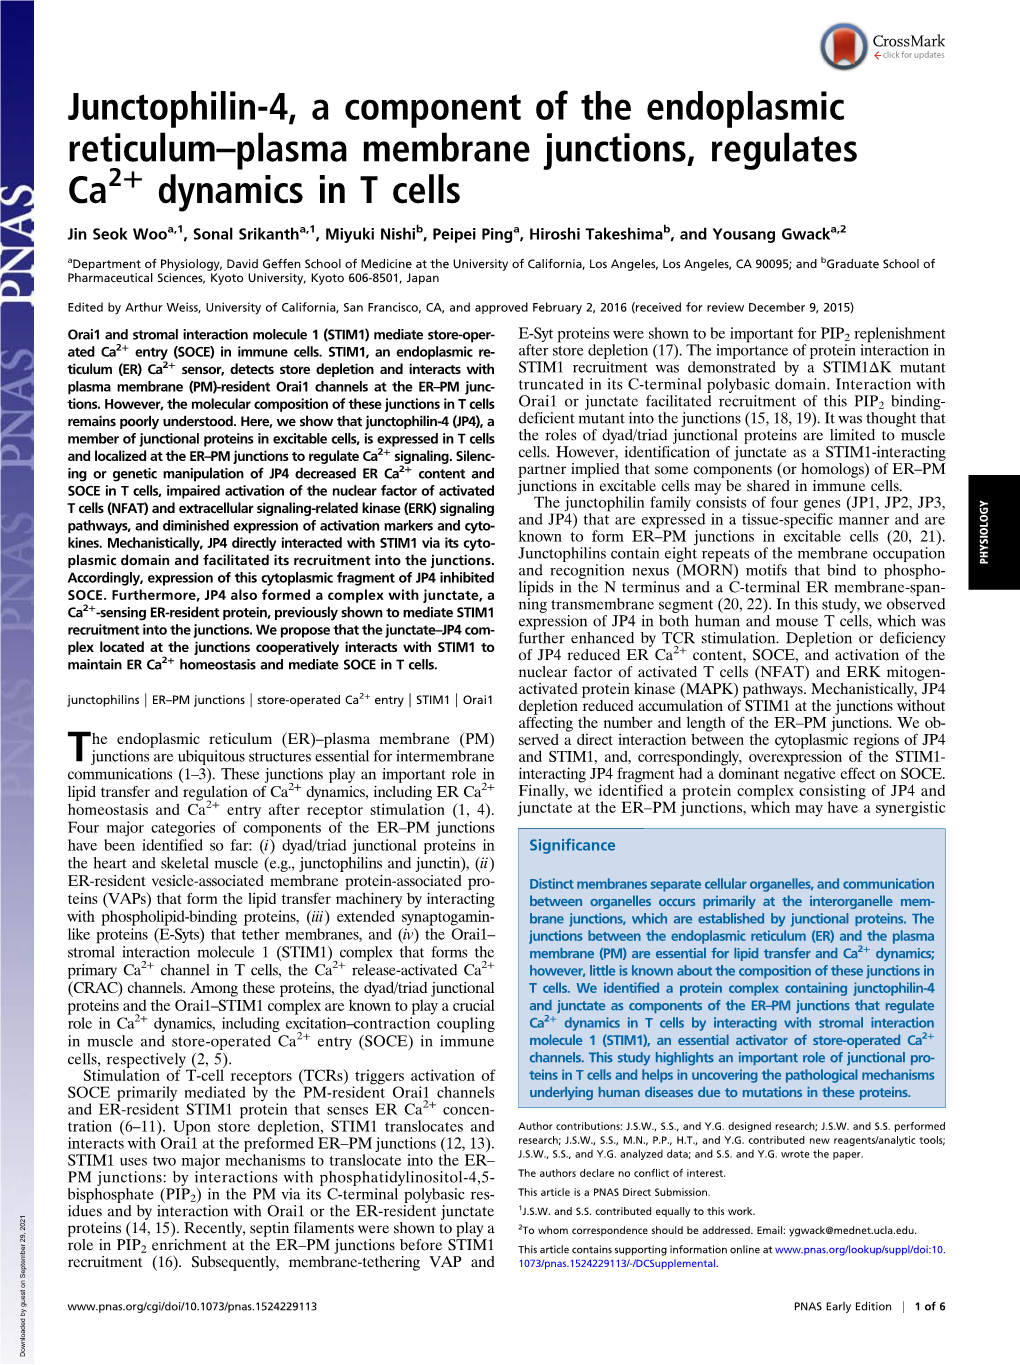 Junctophilin-4, a Component of the Endoplasmic Reticulum–Plasma Membrane Junctions, Regulates + Ca2 Dynamics in T Cells